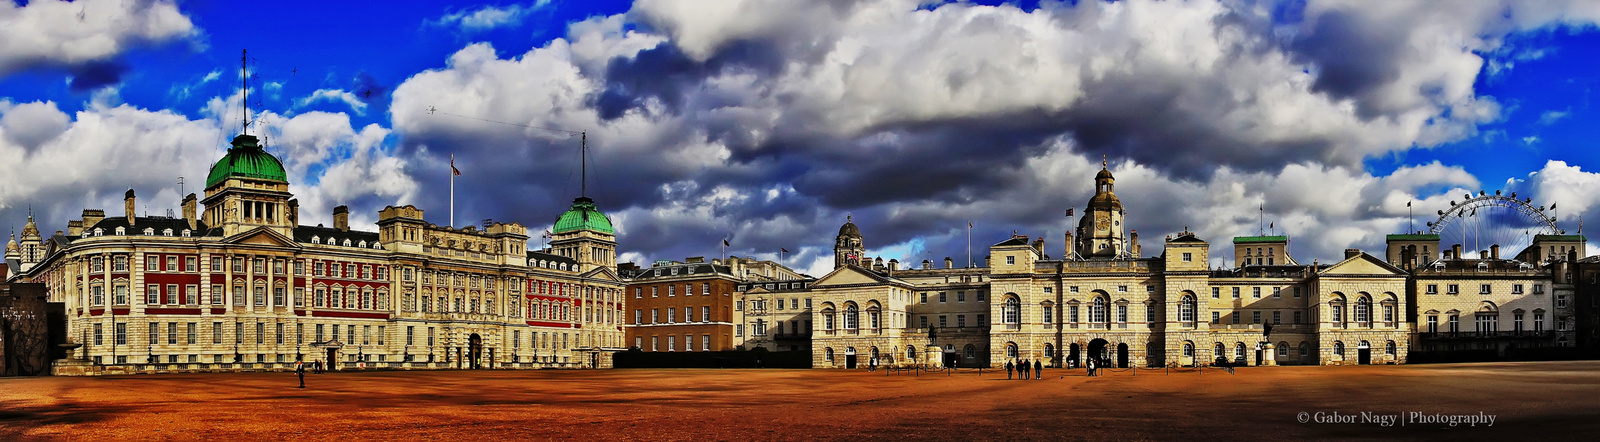 Royal Horse Guards building